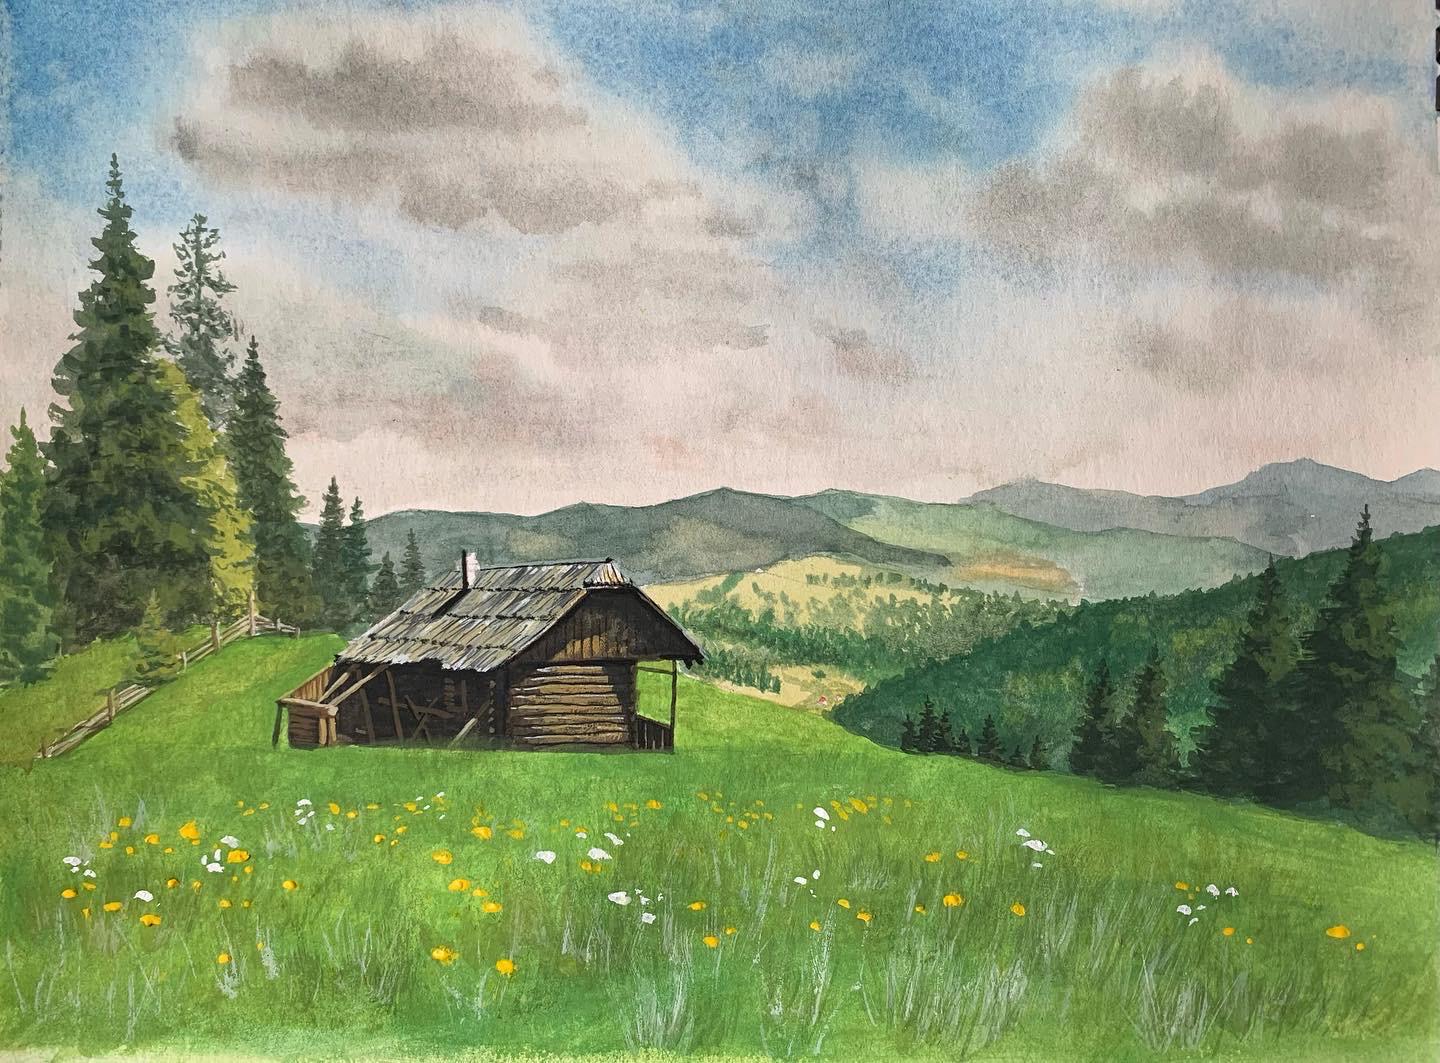 A watercolor plein air painting